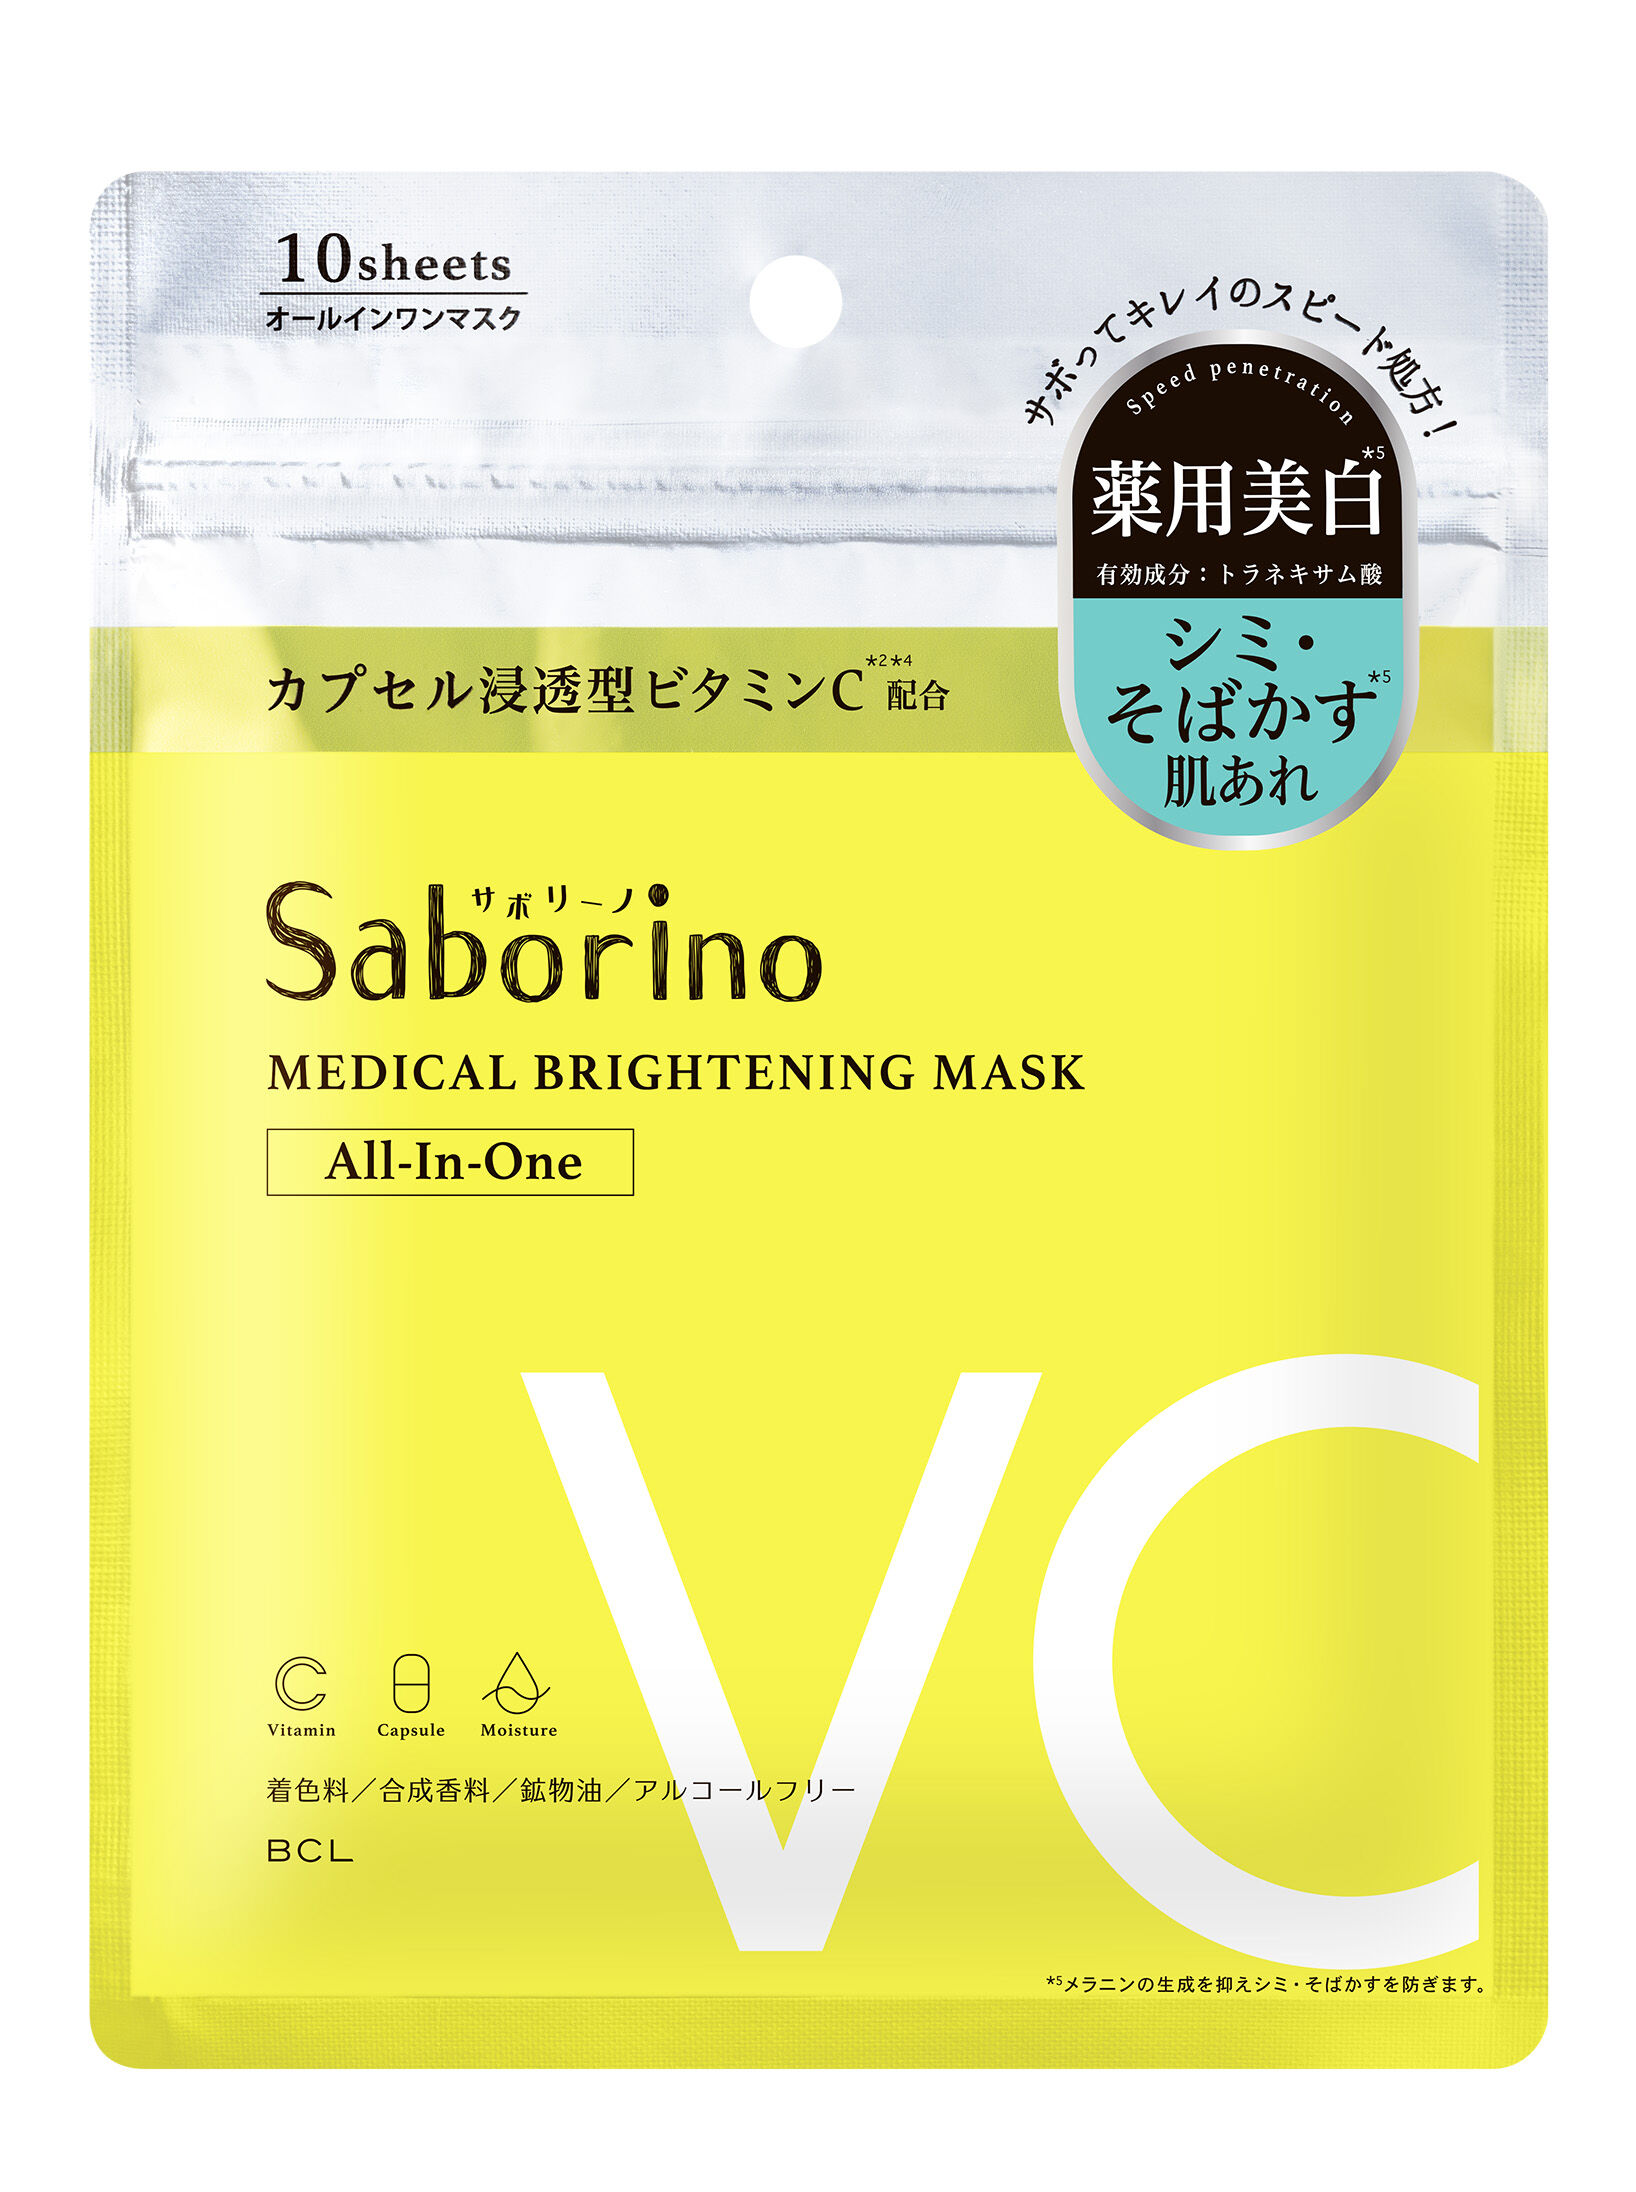 цена Осветляющая маска для лица Bcl Saborino, 10 шт/1 упаковка